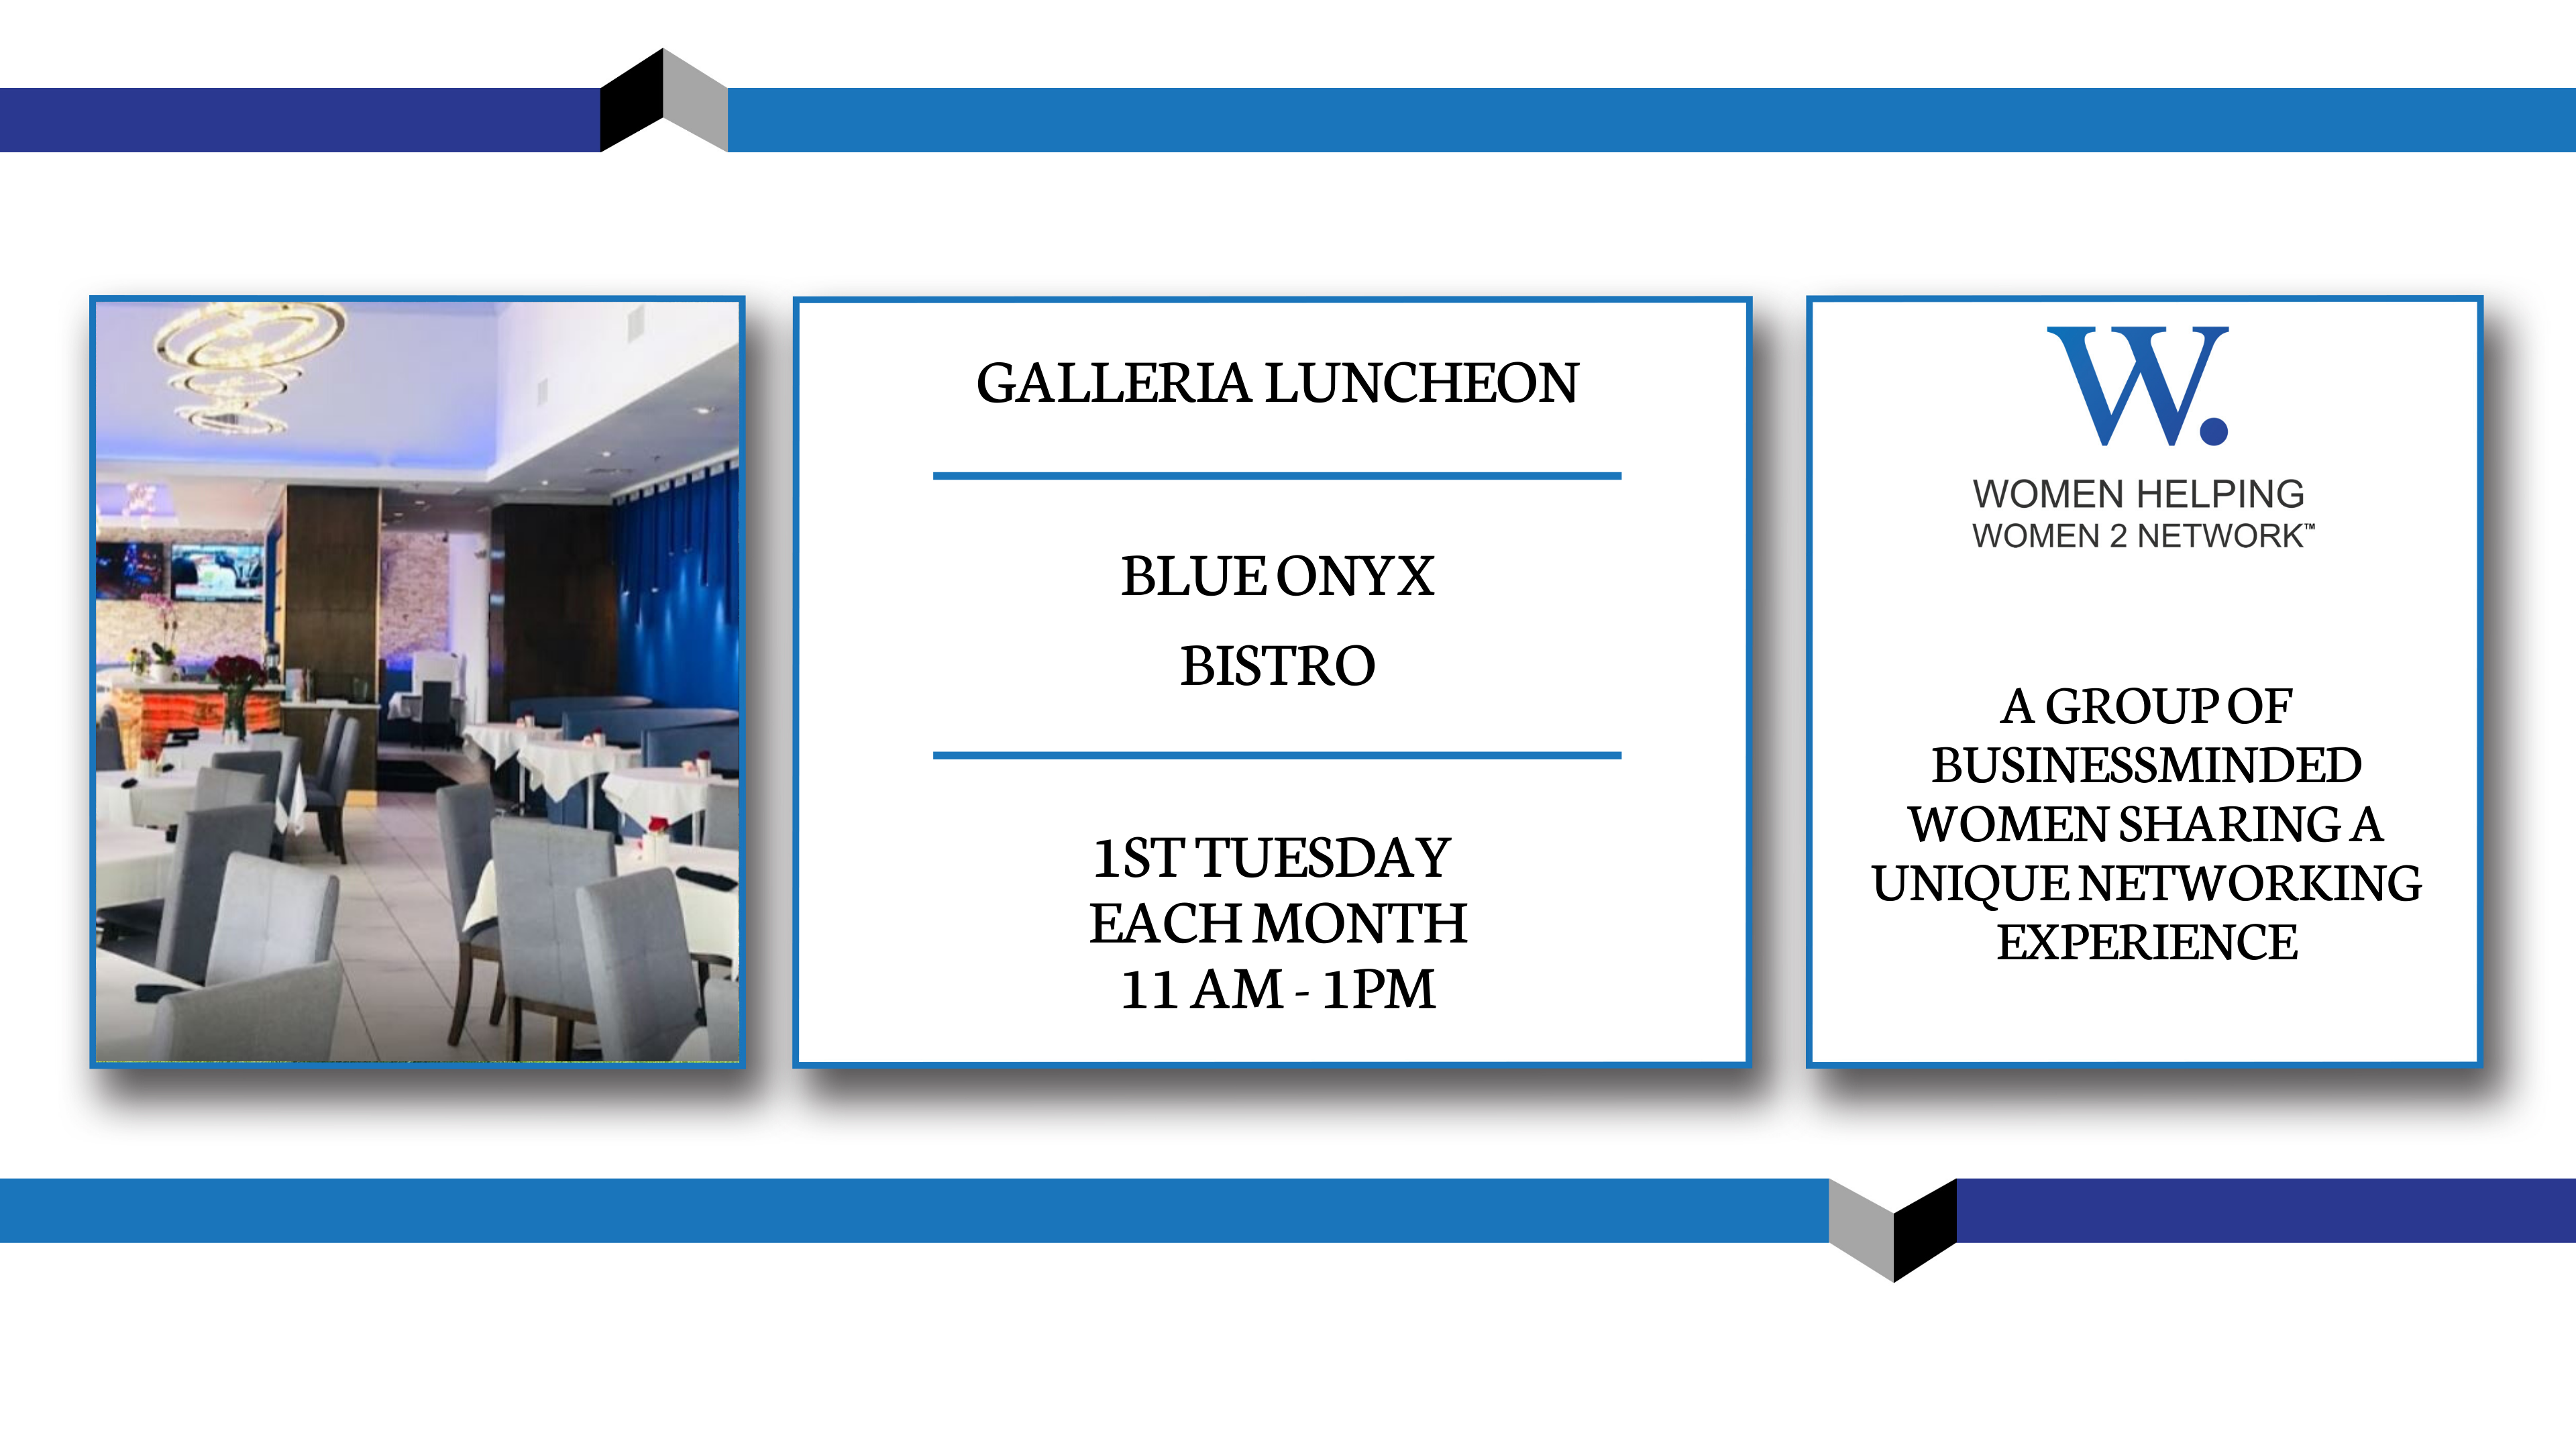 WHW2N - Luncheon - Galleria